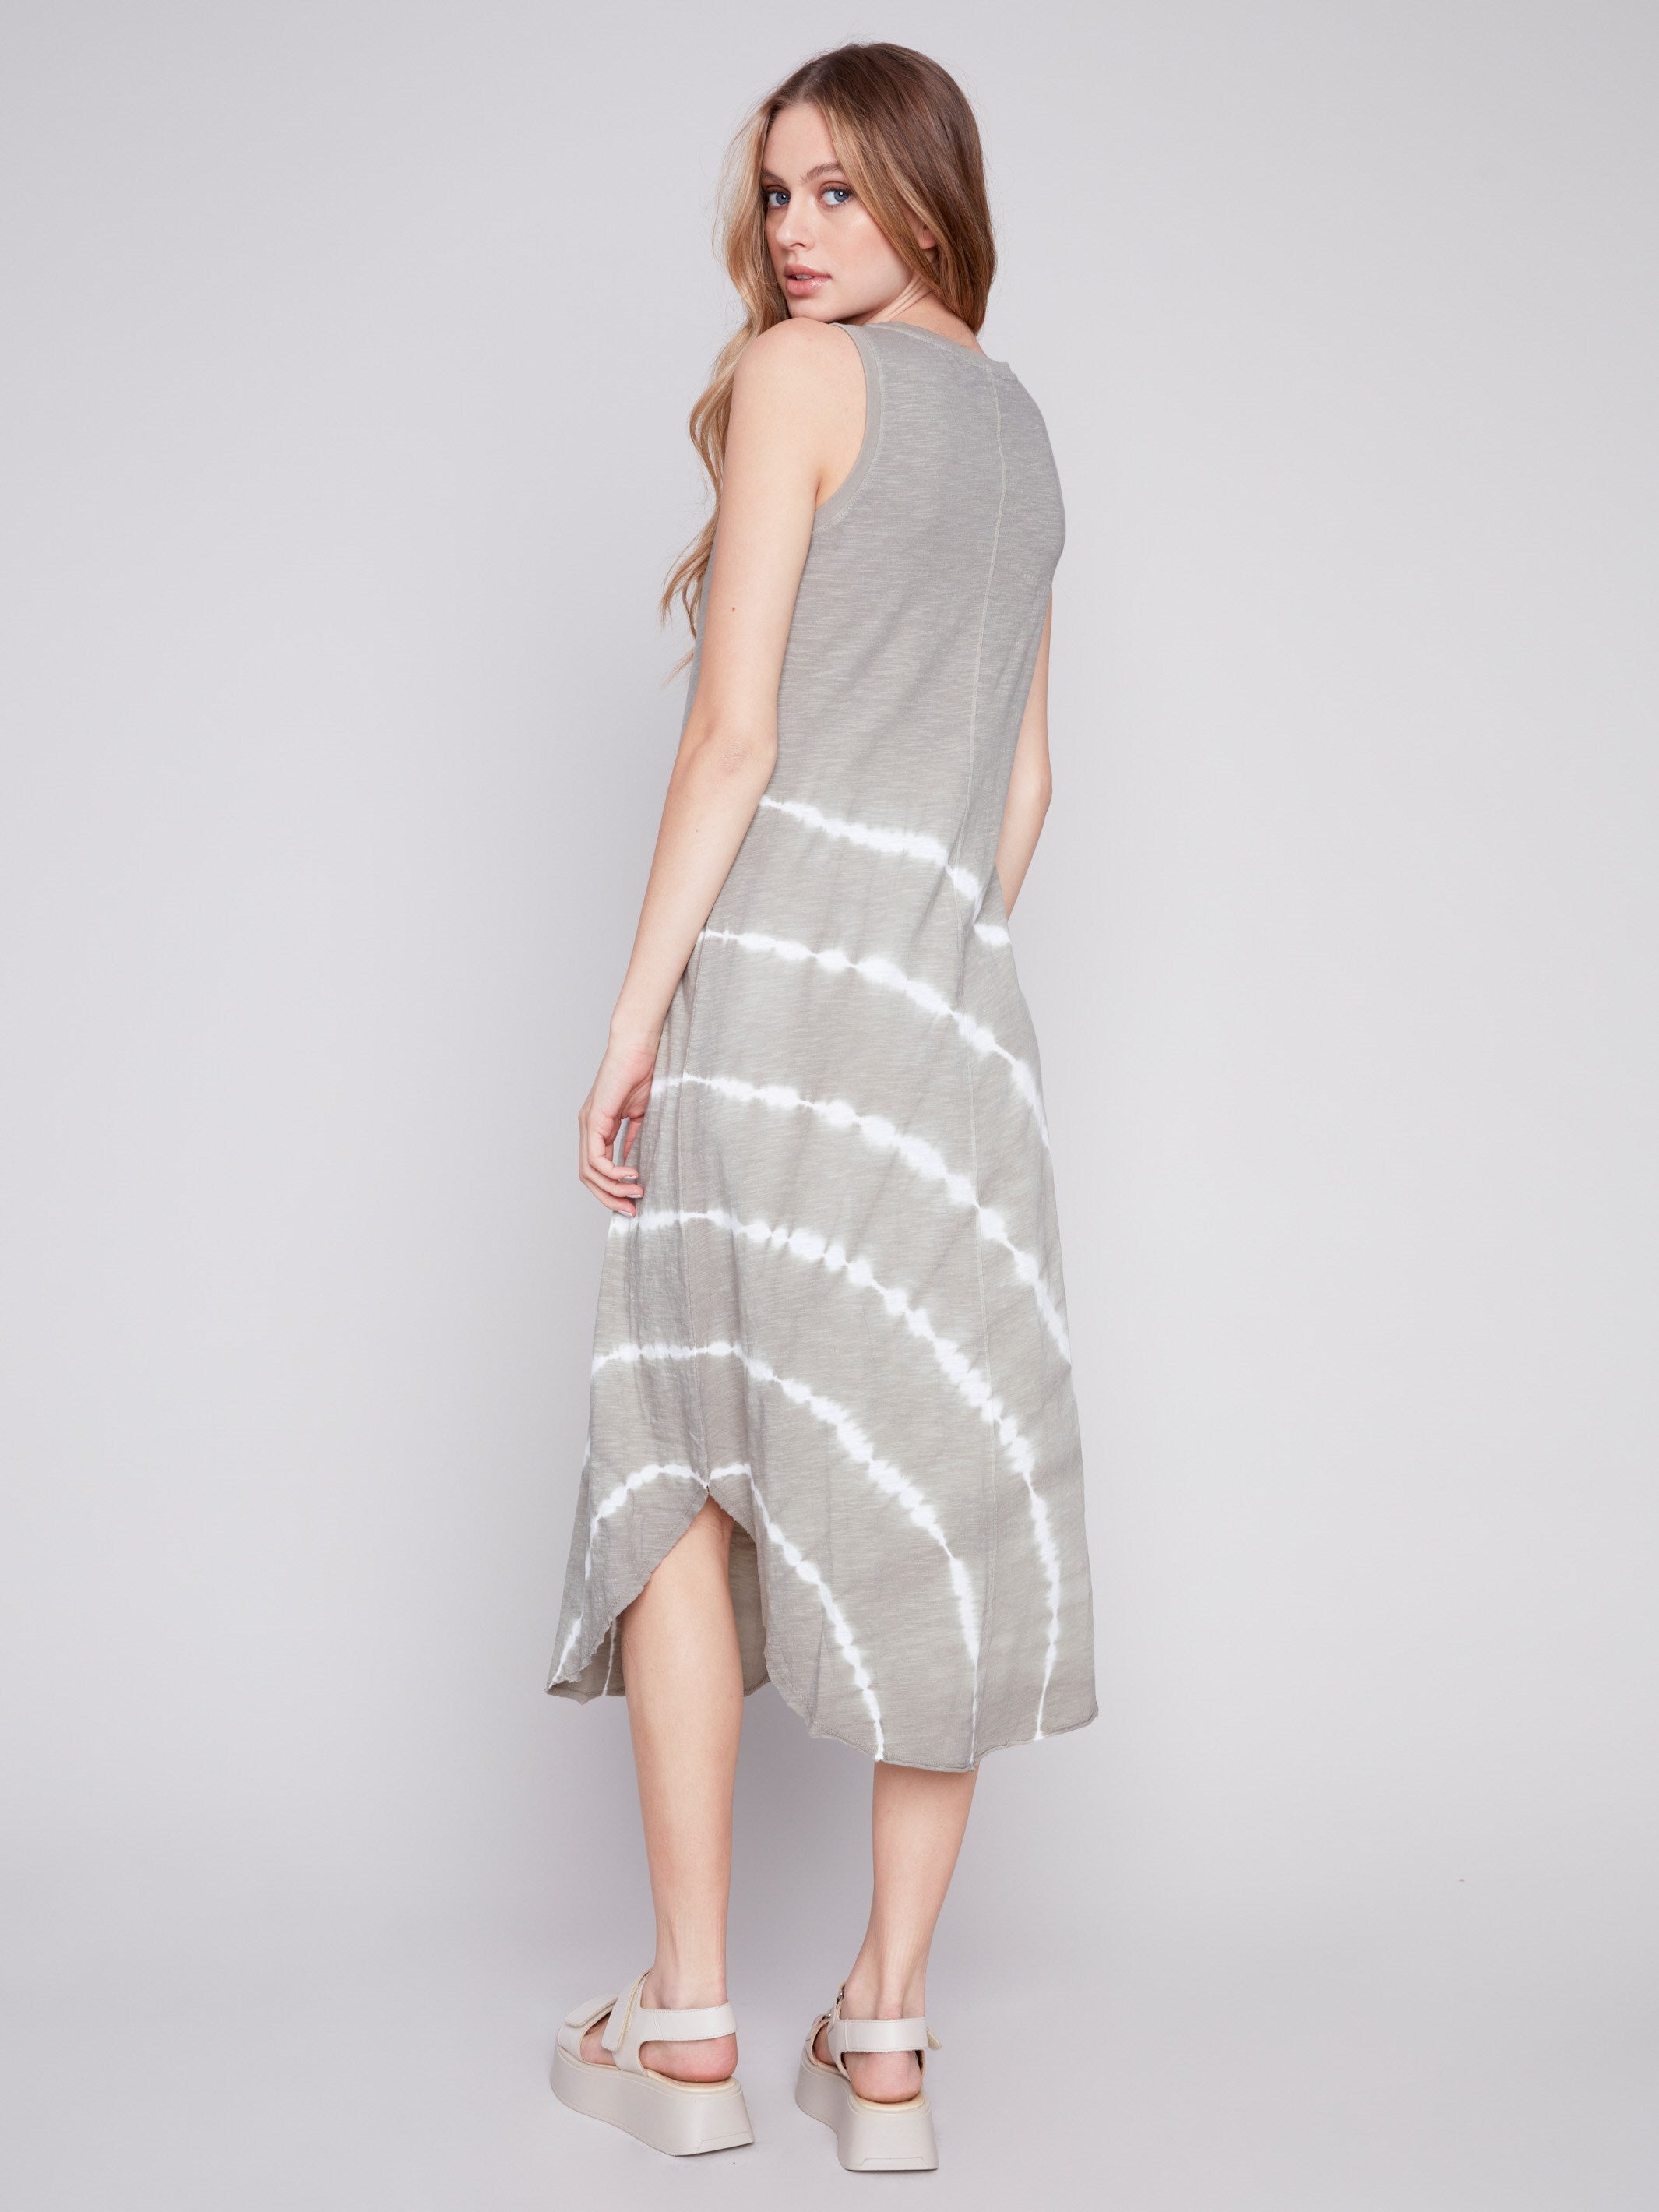 Charlie B Printed Sleeveless Cotton Dress - Celadon - Image 2